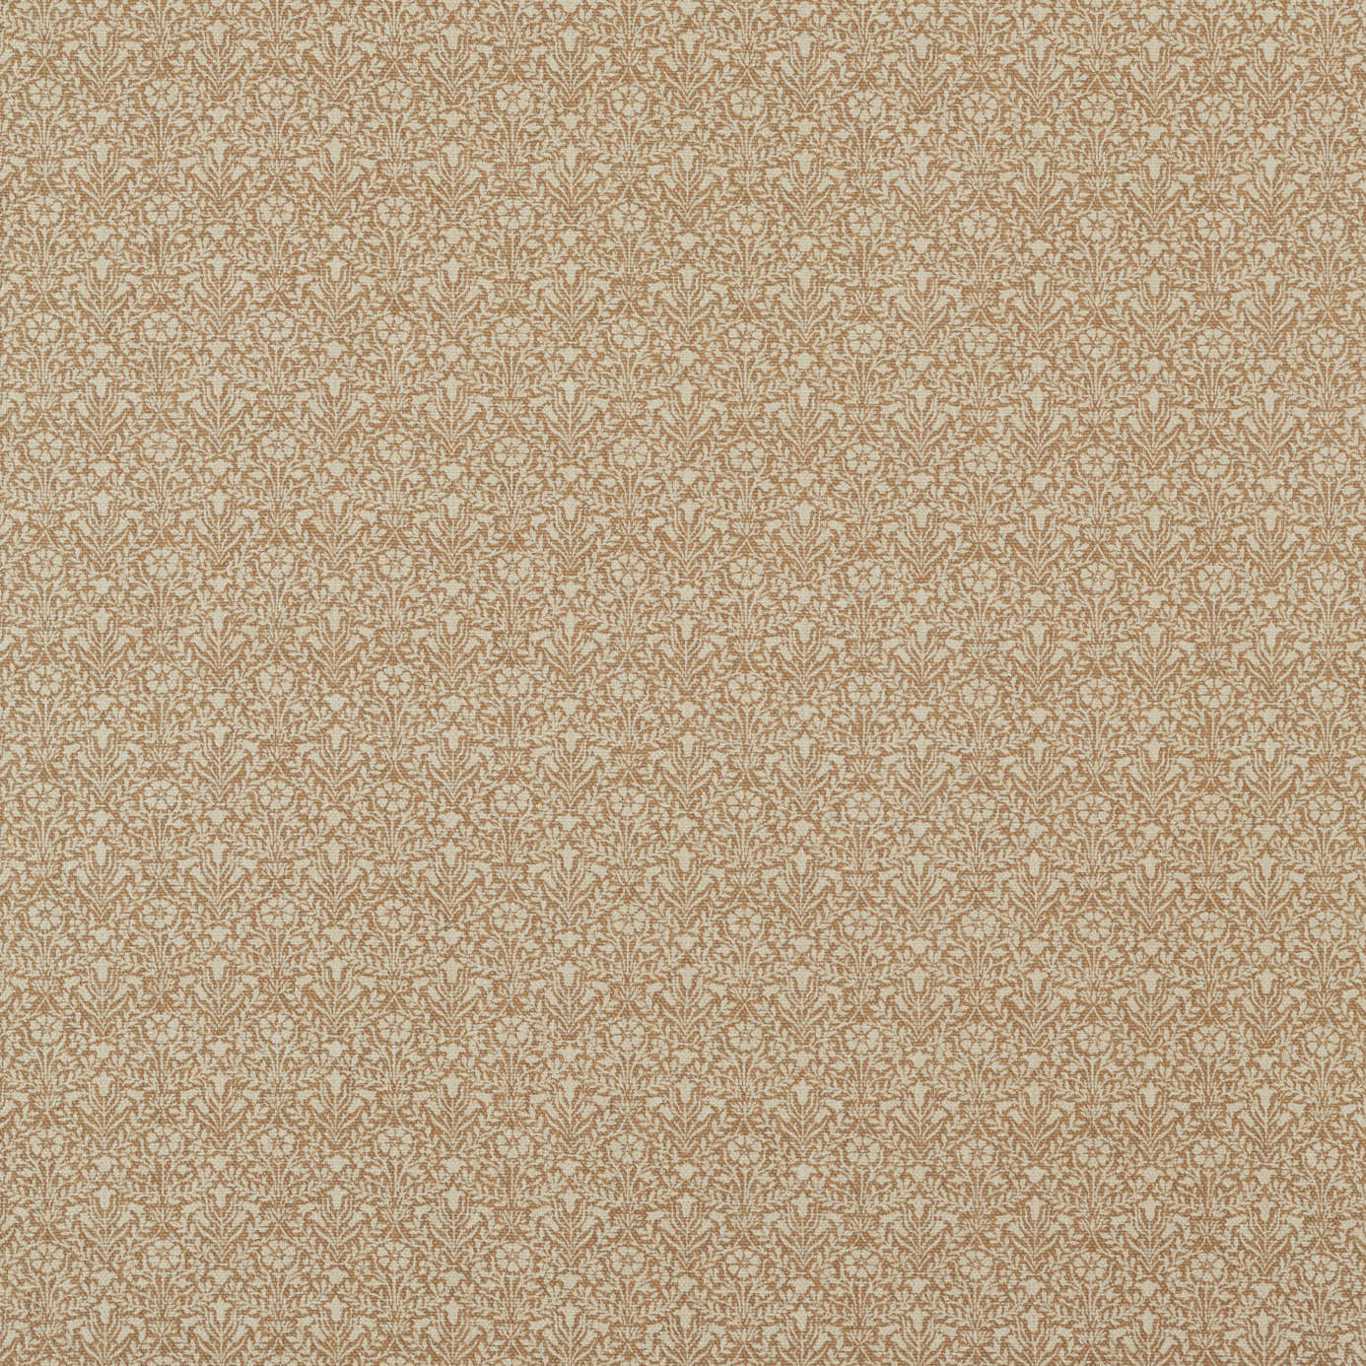 Bellflowers Weave Fabric by Morris & Co. - DM4U236524 - Wheat